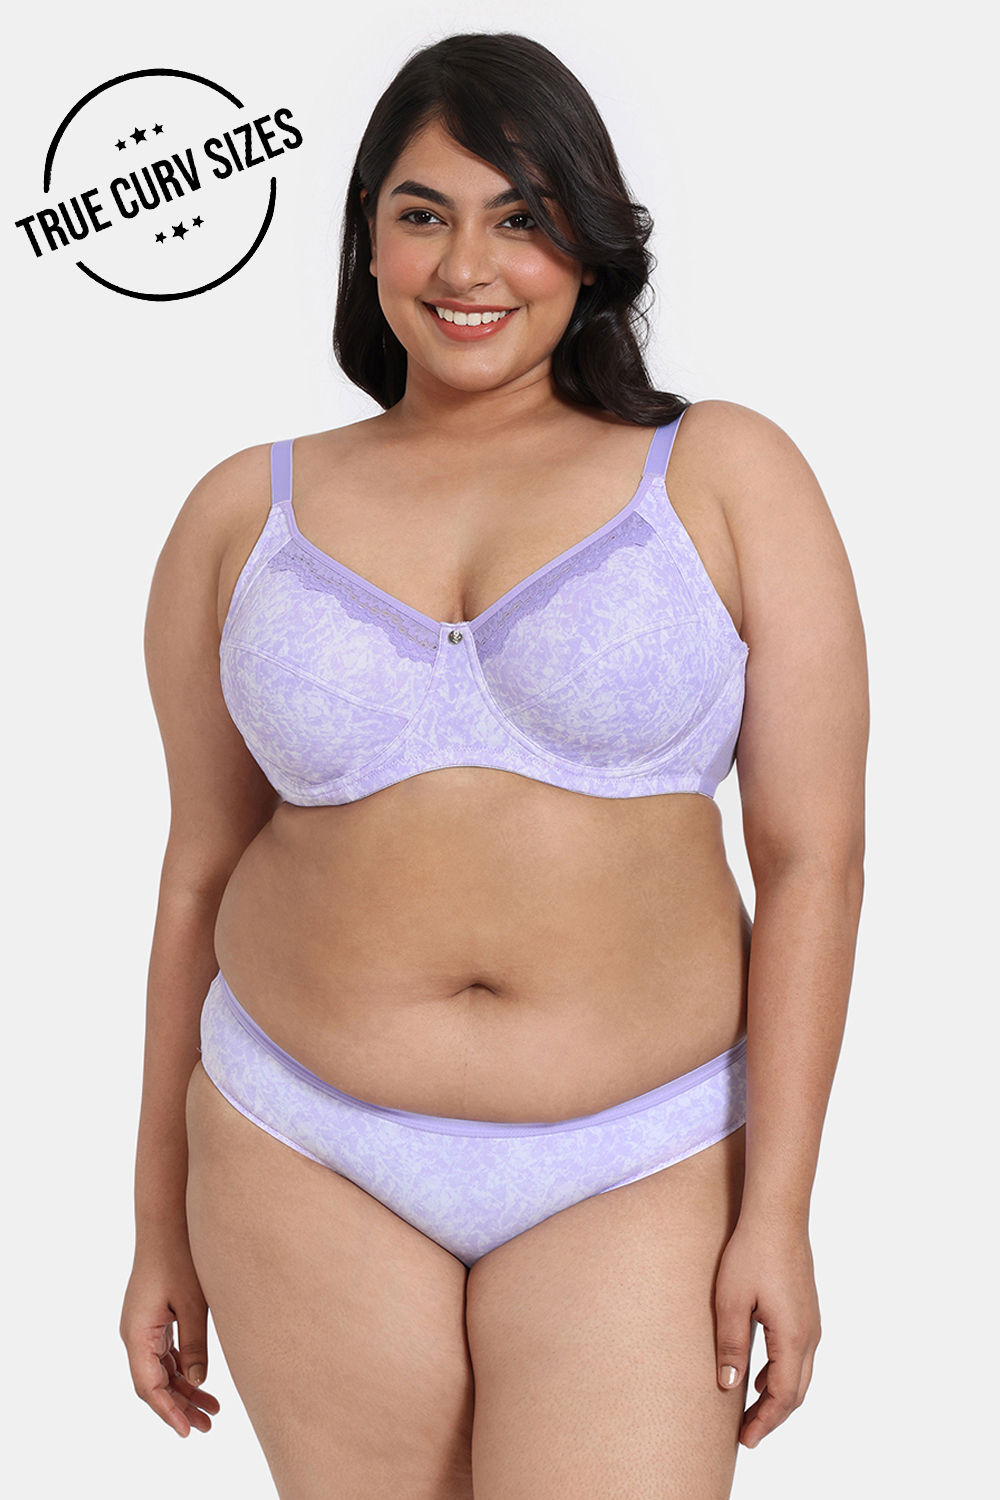 https://cdn.zivame.com/ik-seo/media/catalog/product/1/_/1_68_22/zivame-mio-amore-double-layered-padded-regular-wired-full-coverage-super-support-bra-with-bikini-panty-purple-print.jpg